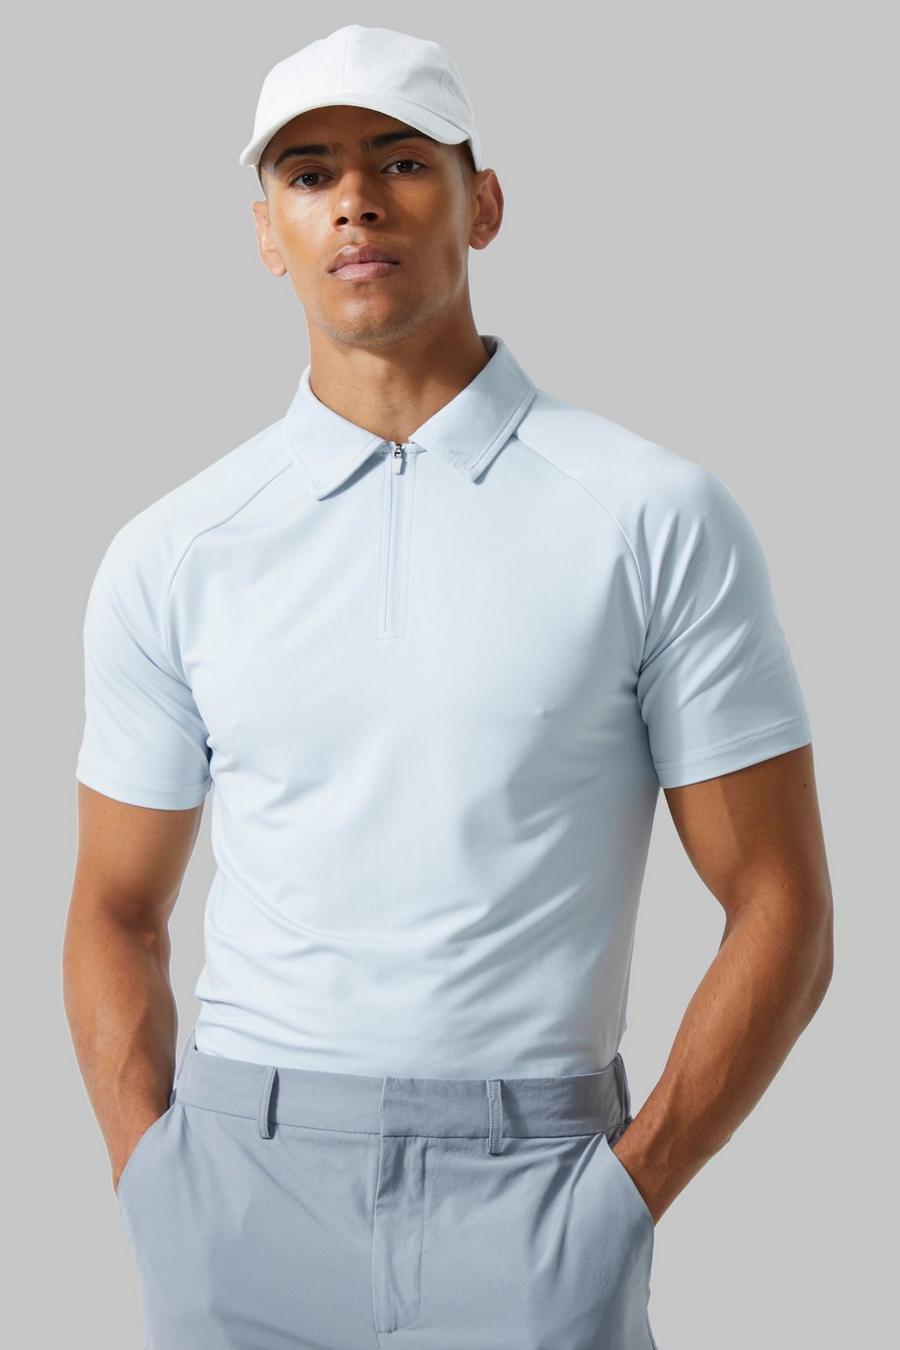 B91xZ Workout Shirts Mens Fashion Casual Sports Gradient Lapel